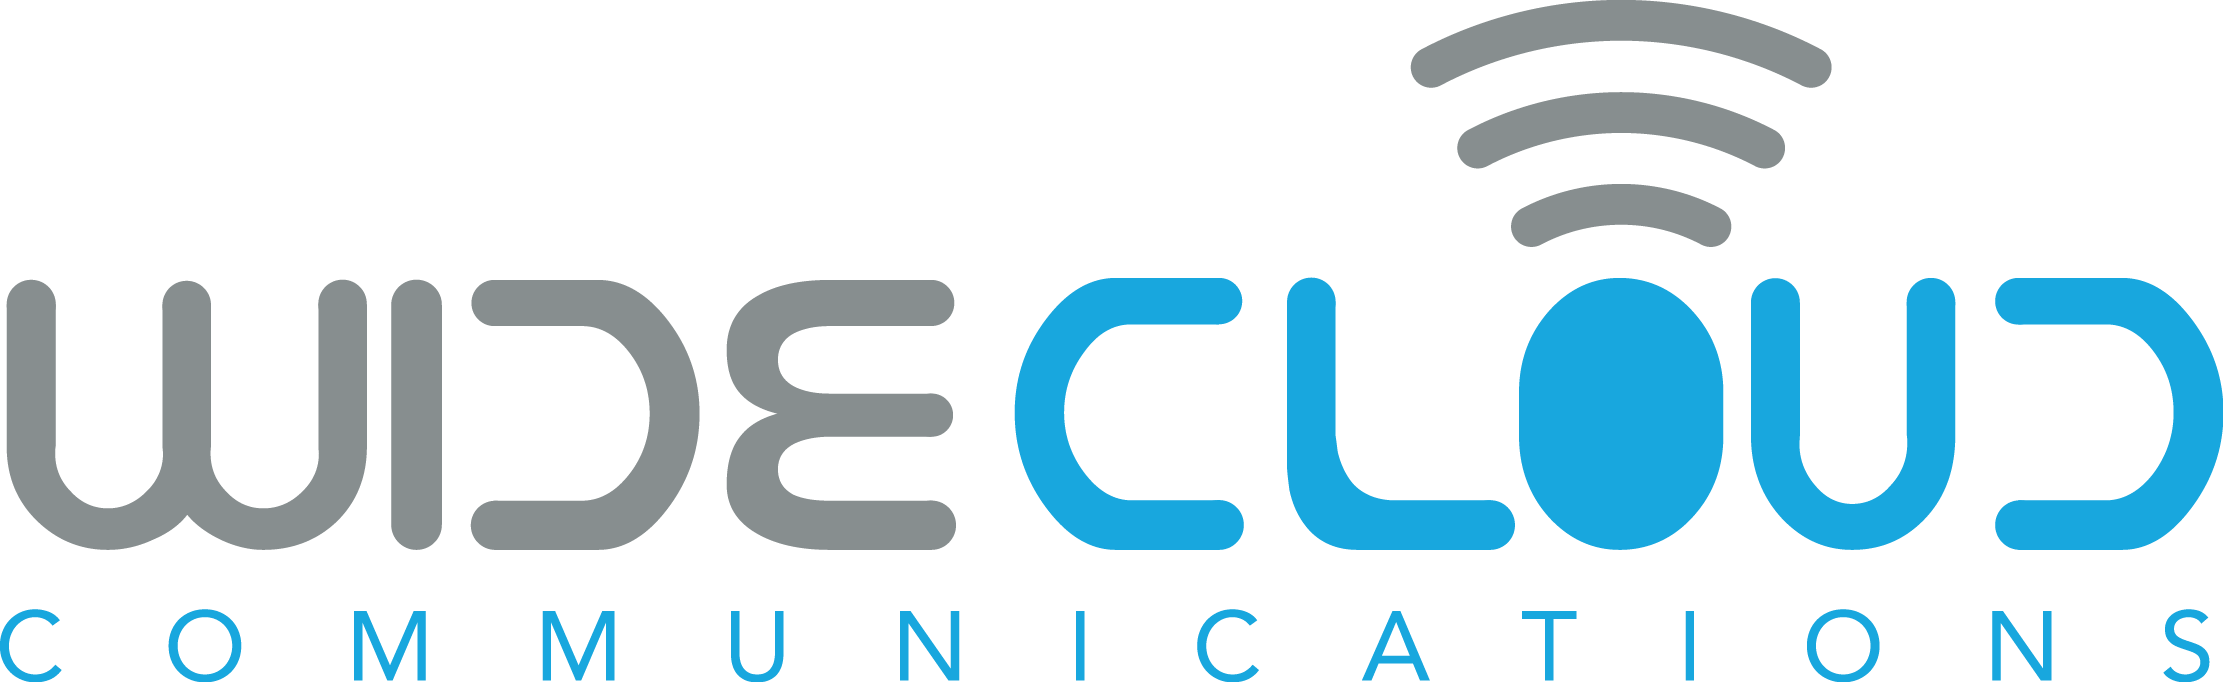 Wide Cloud Communications - Logo